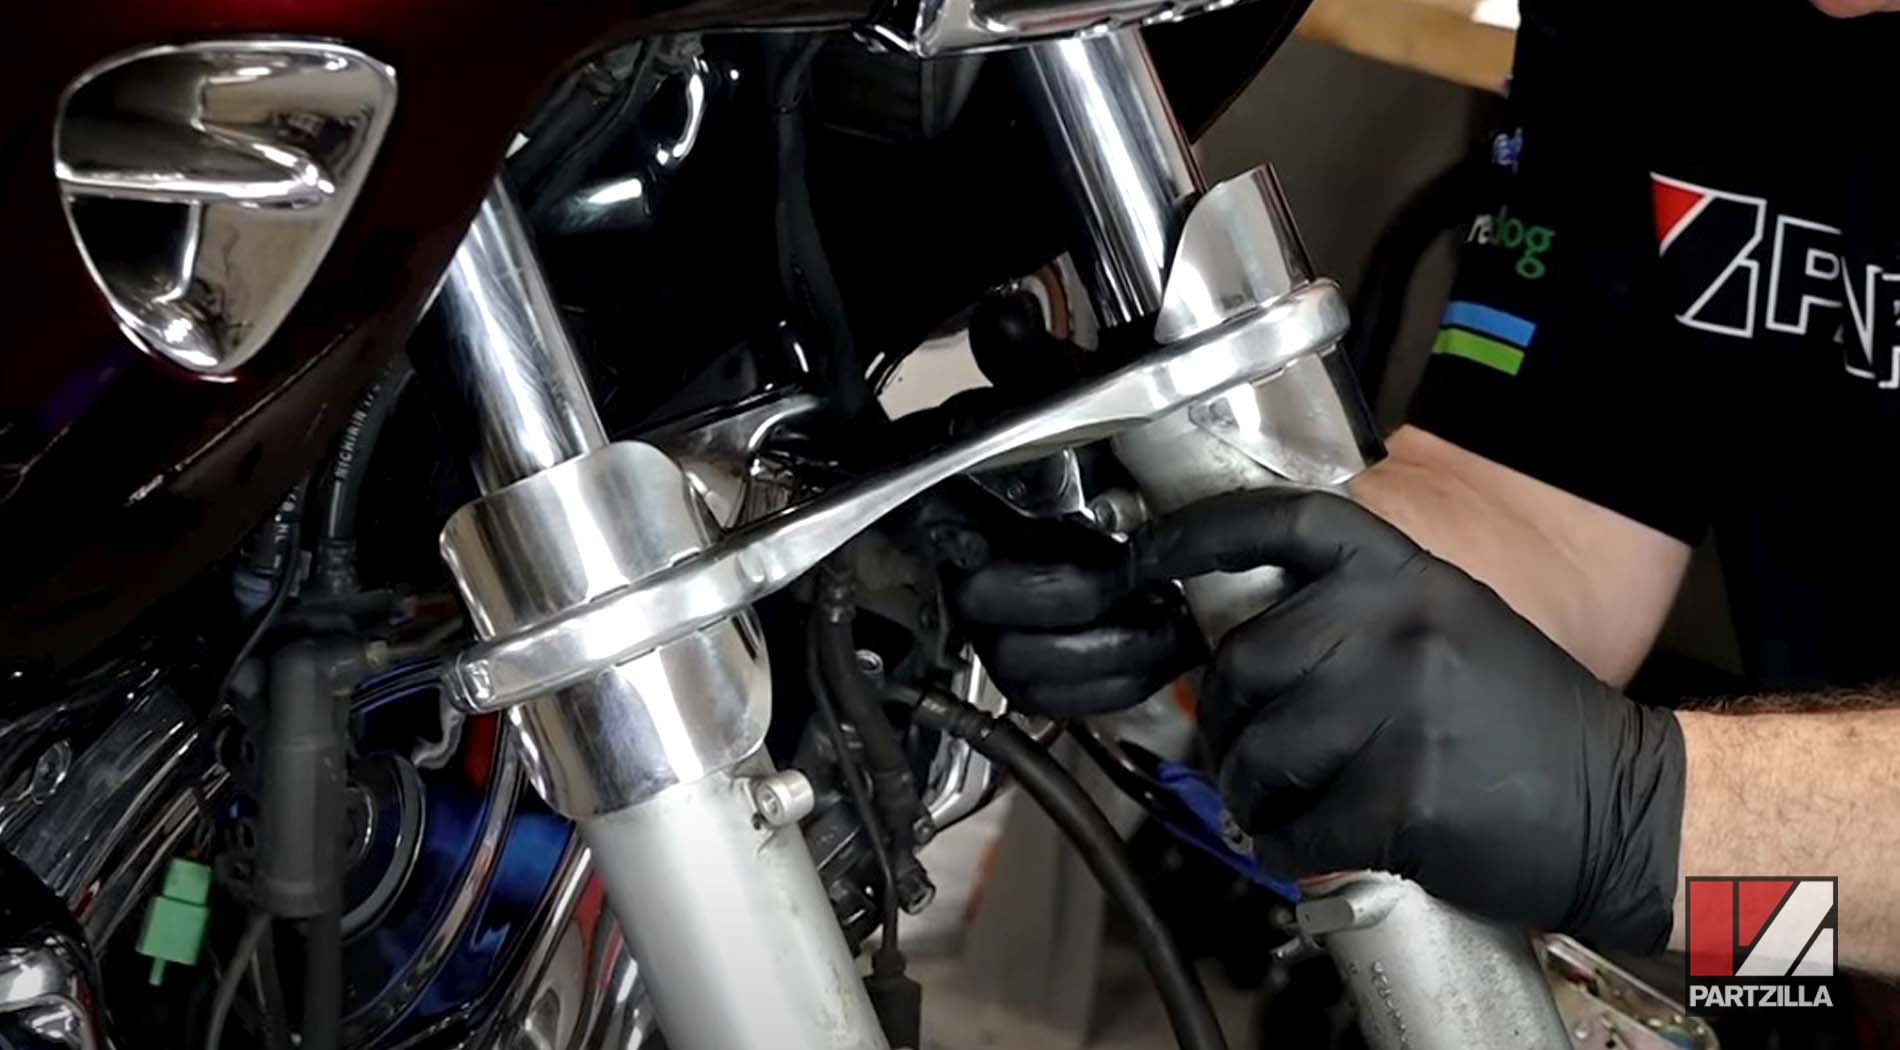 Honda Goldwing steering bearing replacement fork brace removal